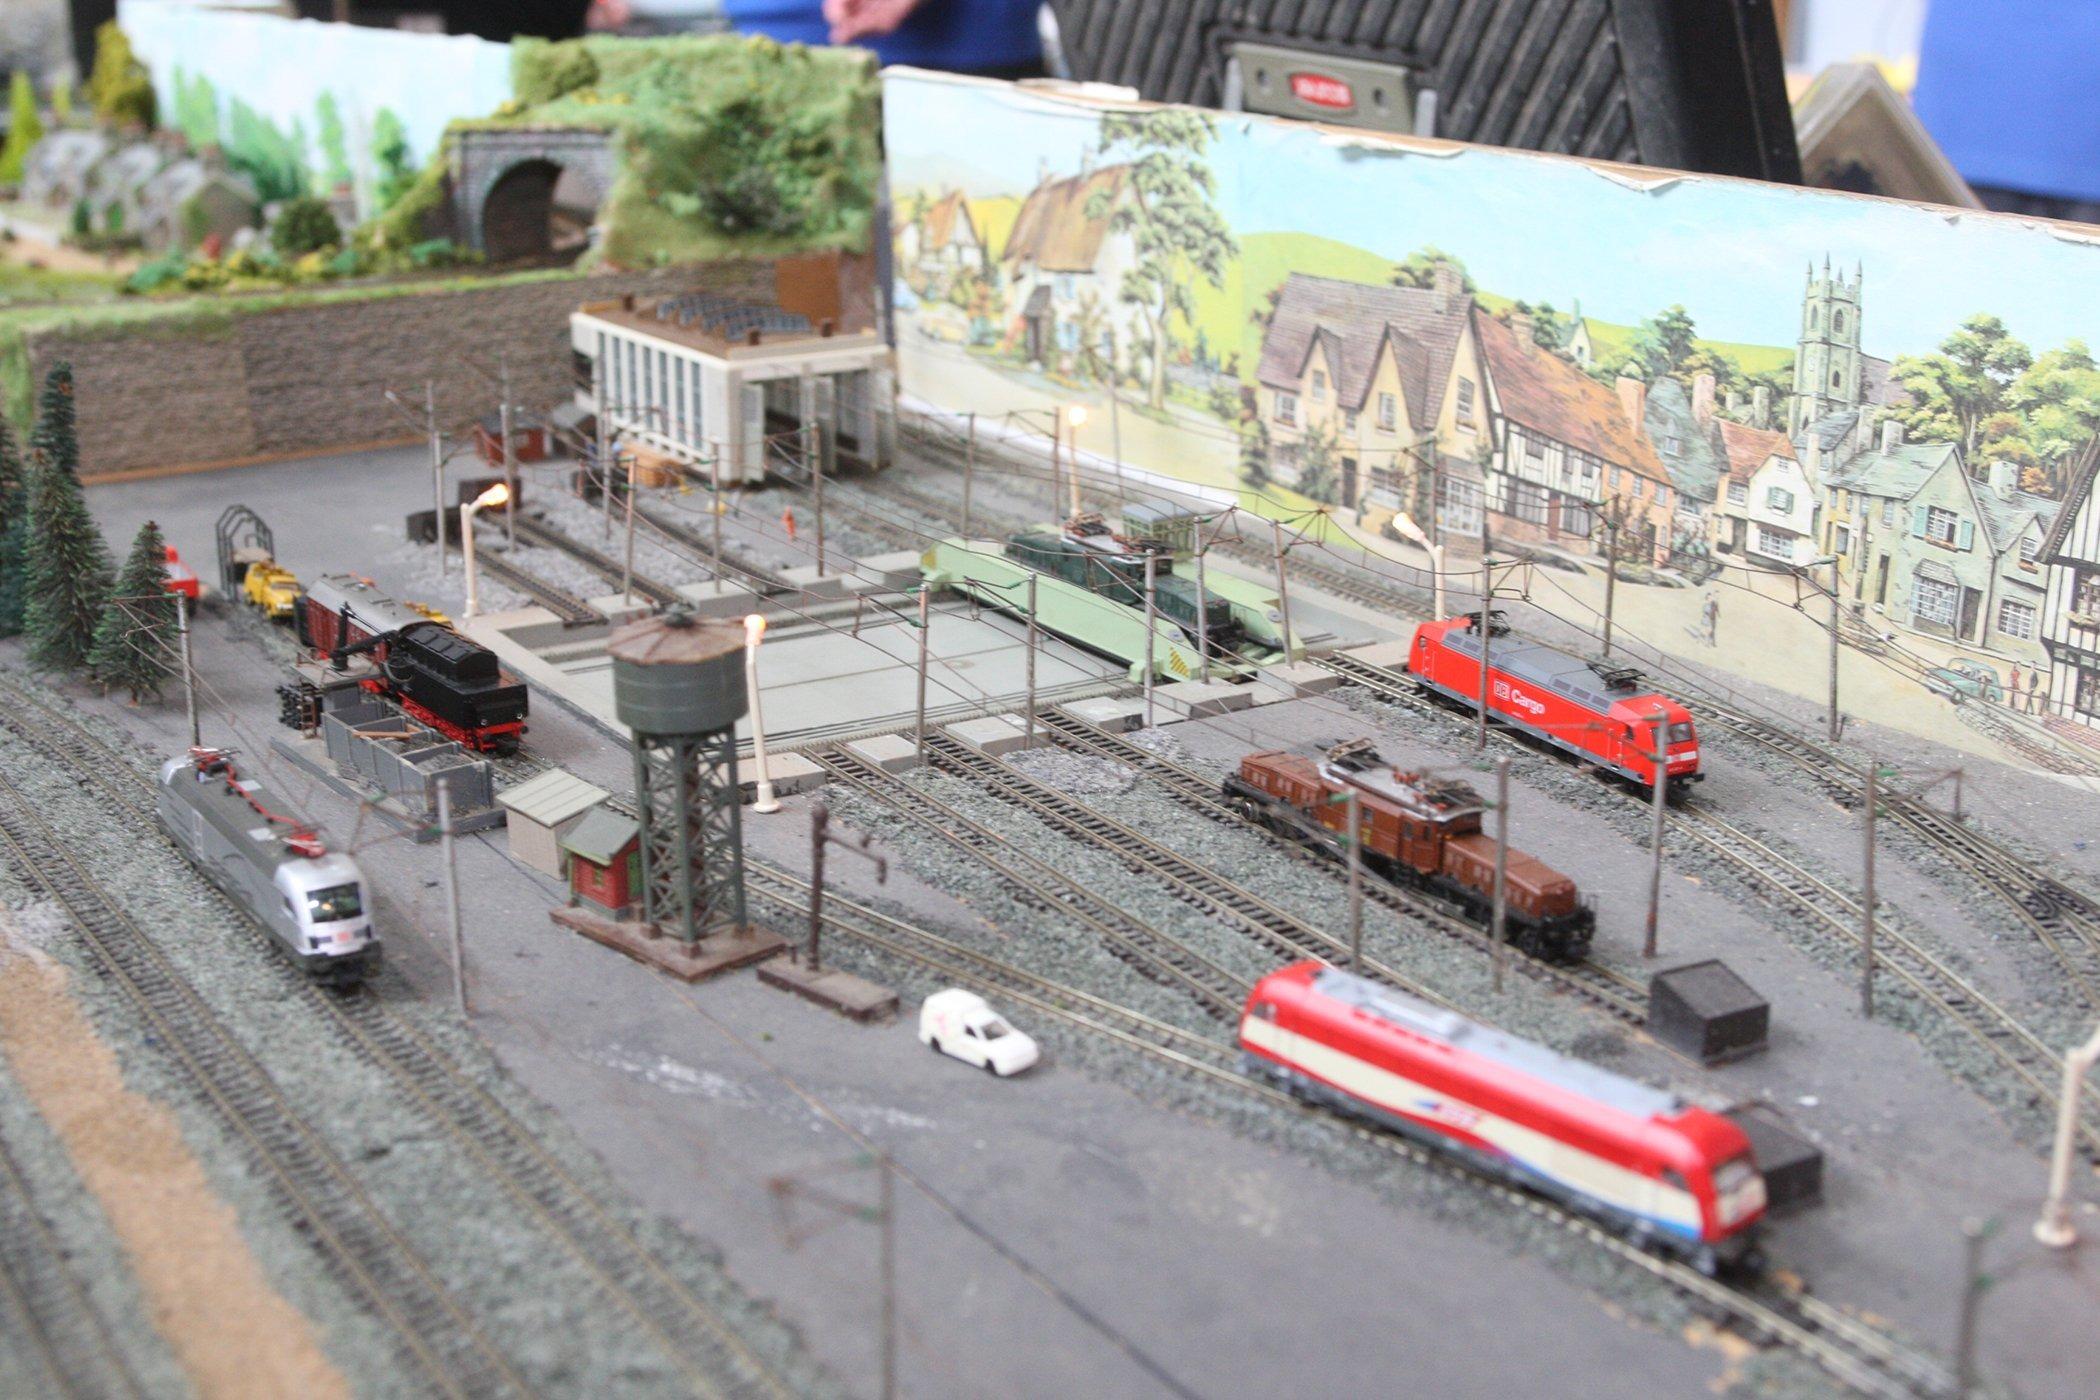 West Sussex N Gauge Model Railway Club builds its biggest layout yet. Photo by Derek Martin DM19111012a